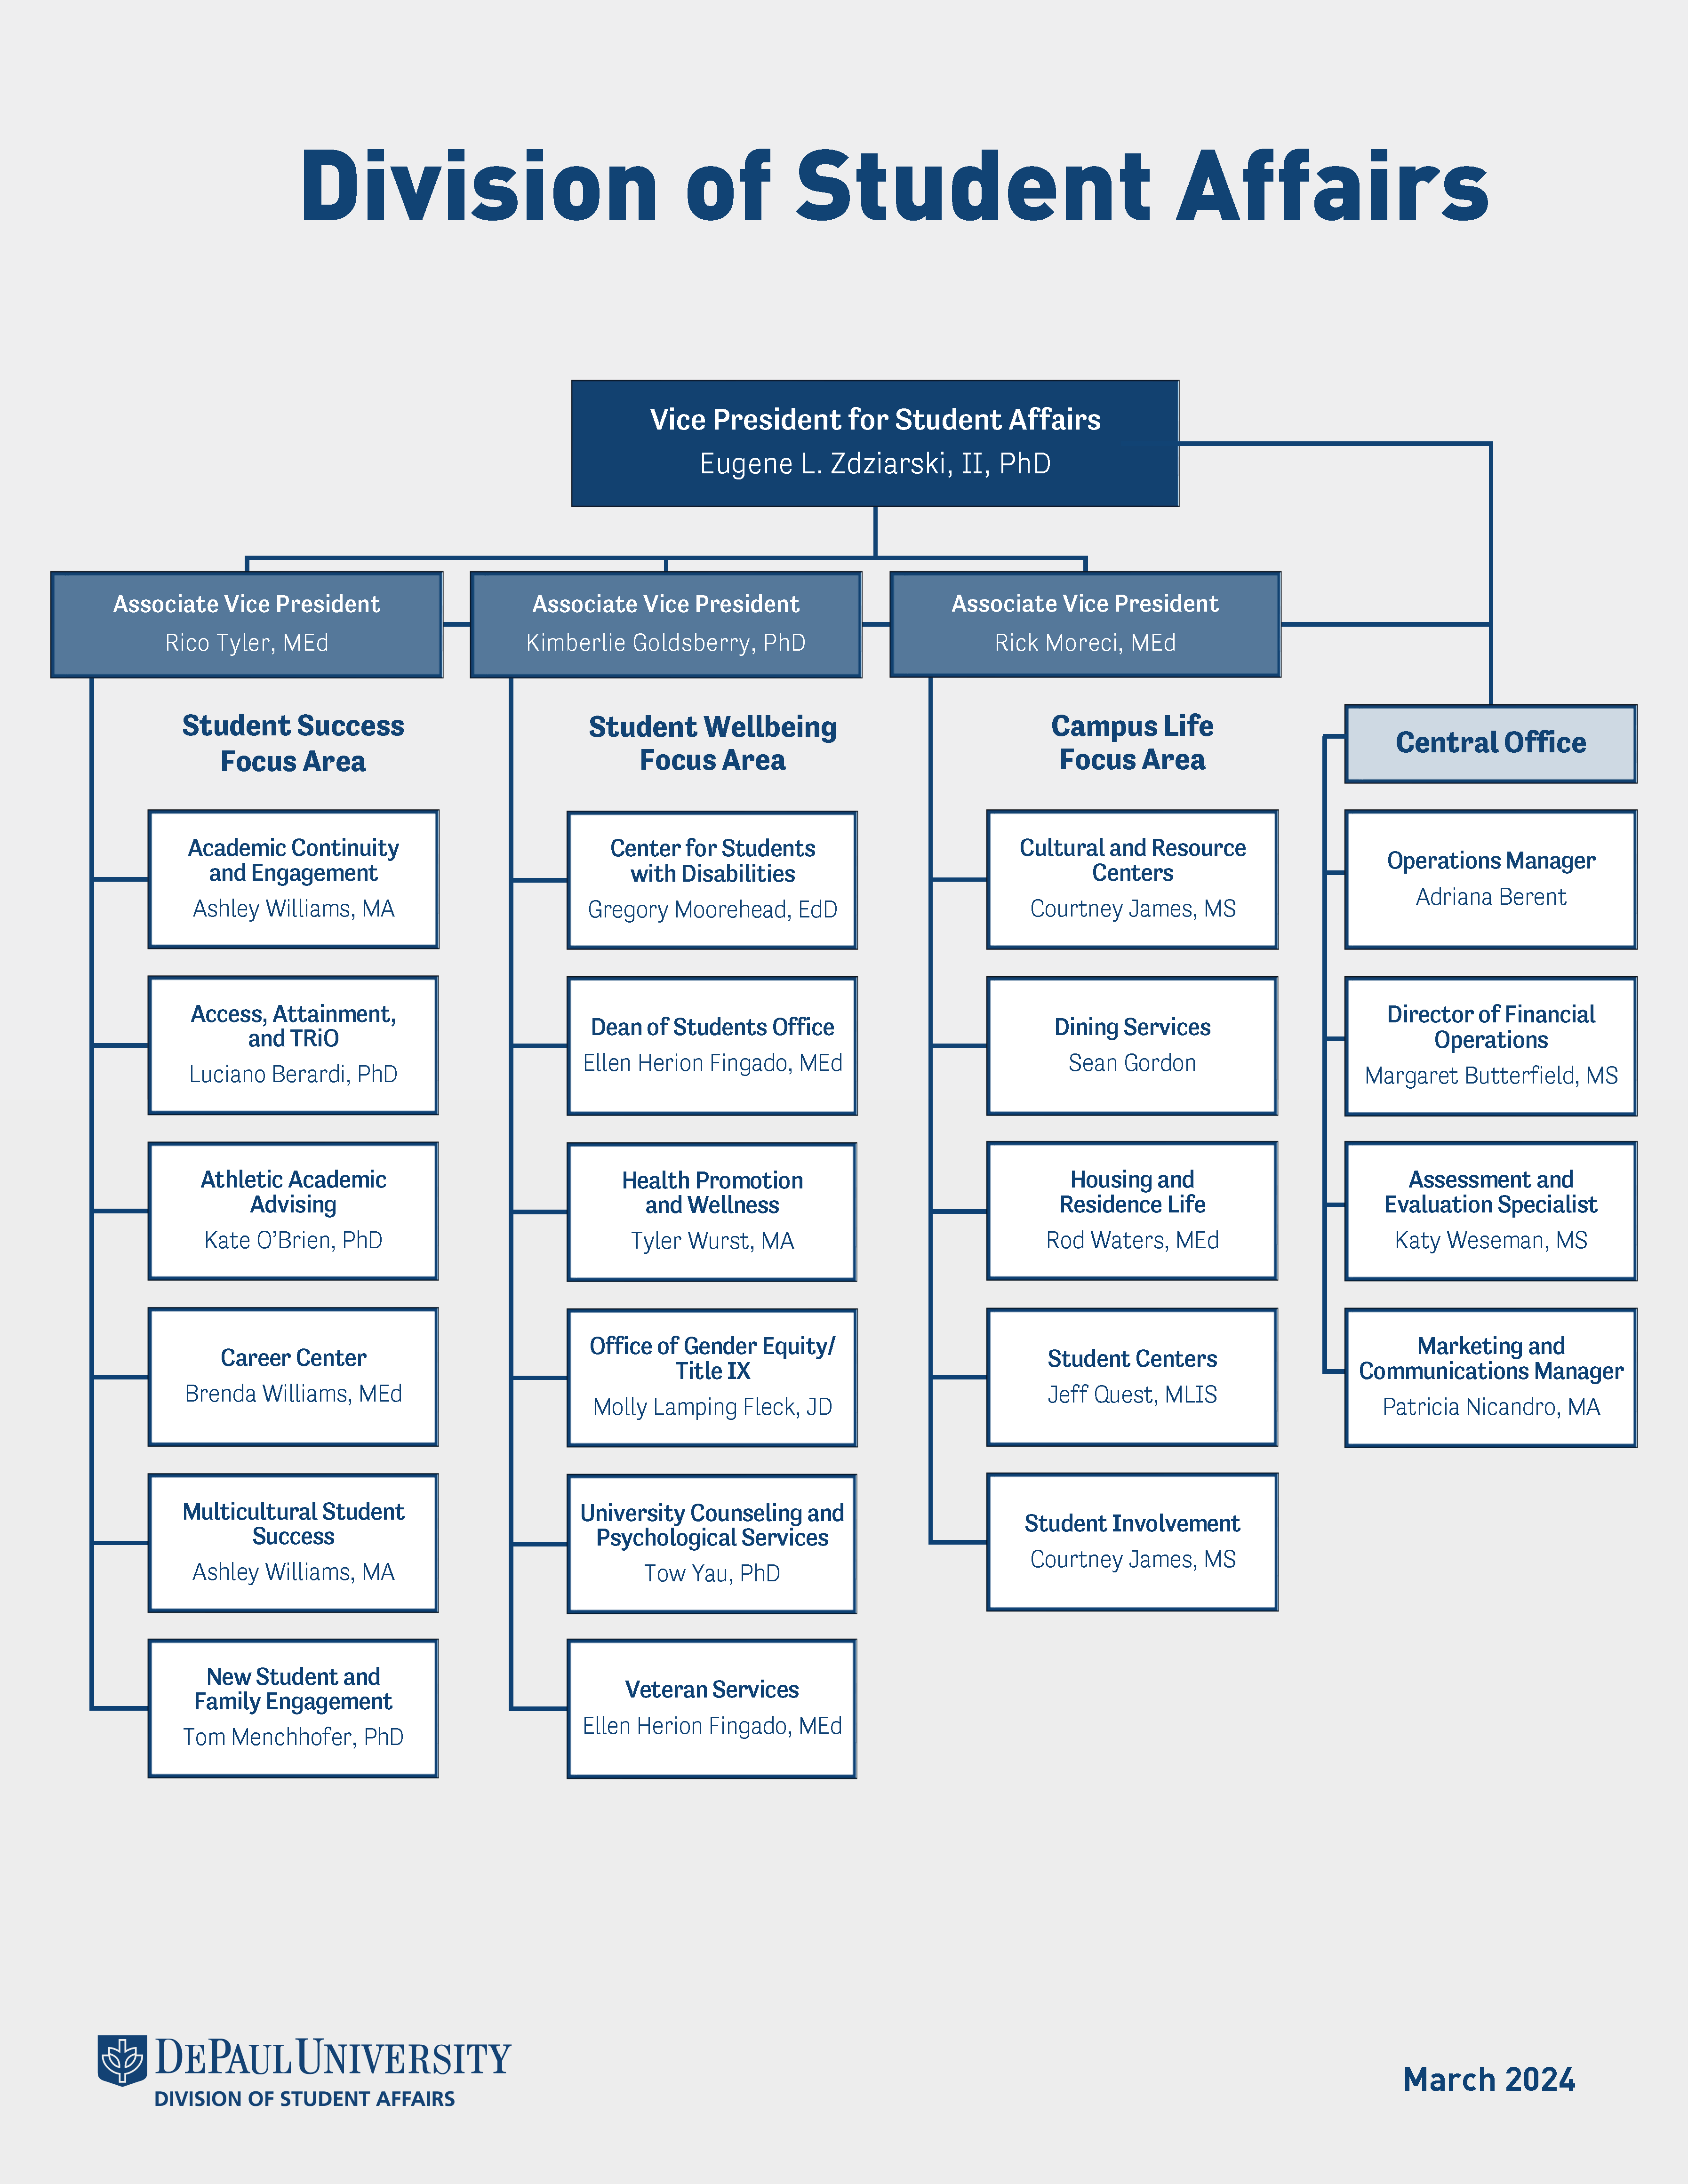 Student Affairs Organizational Chart